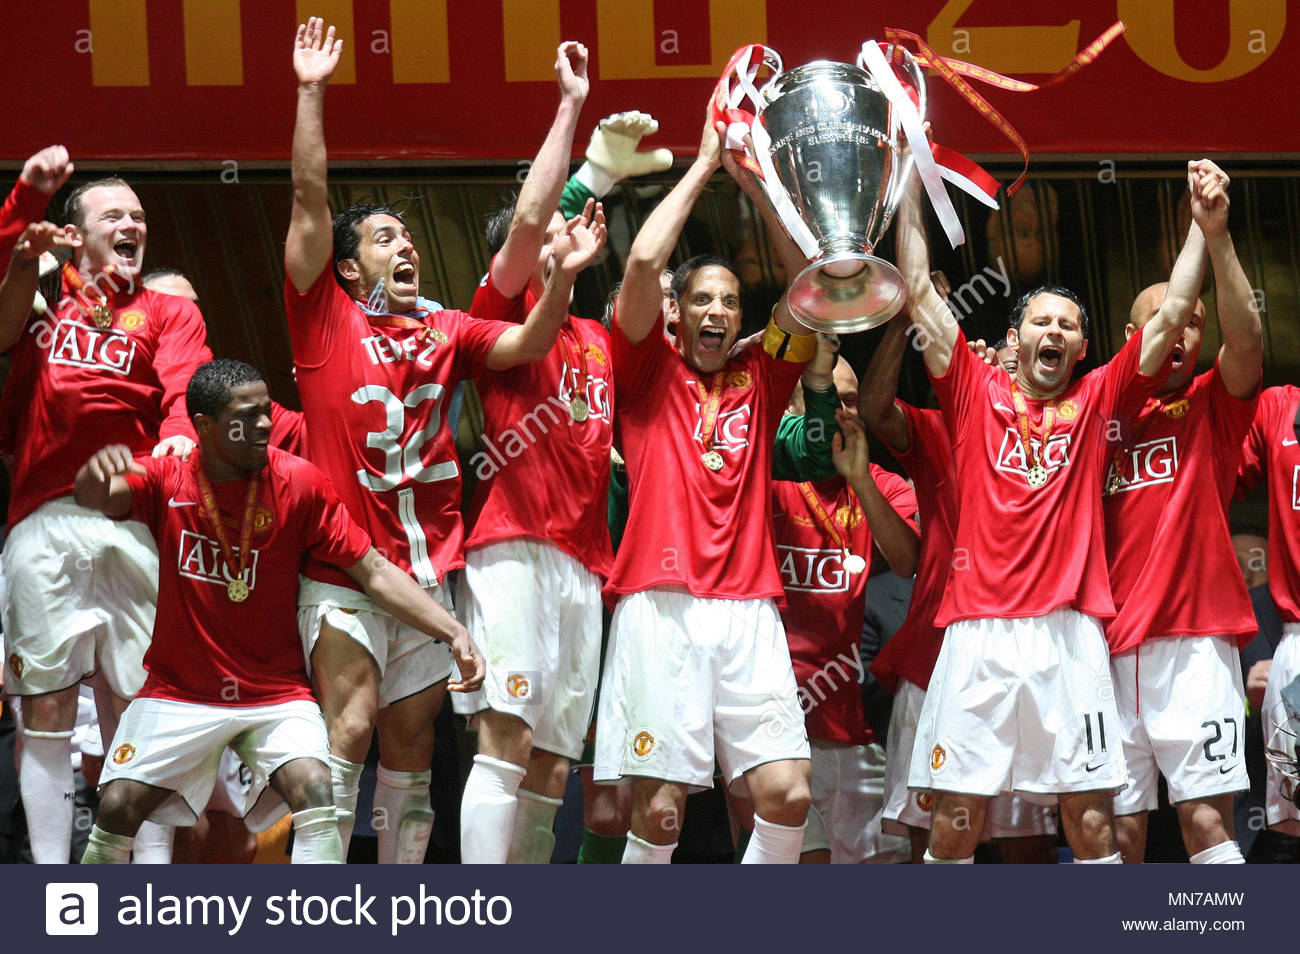 uefa champions league 2008